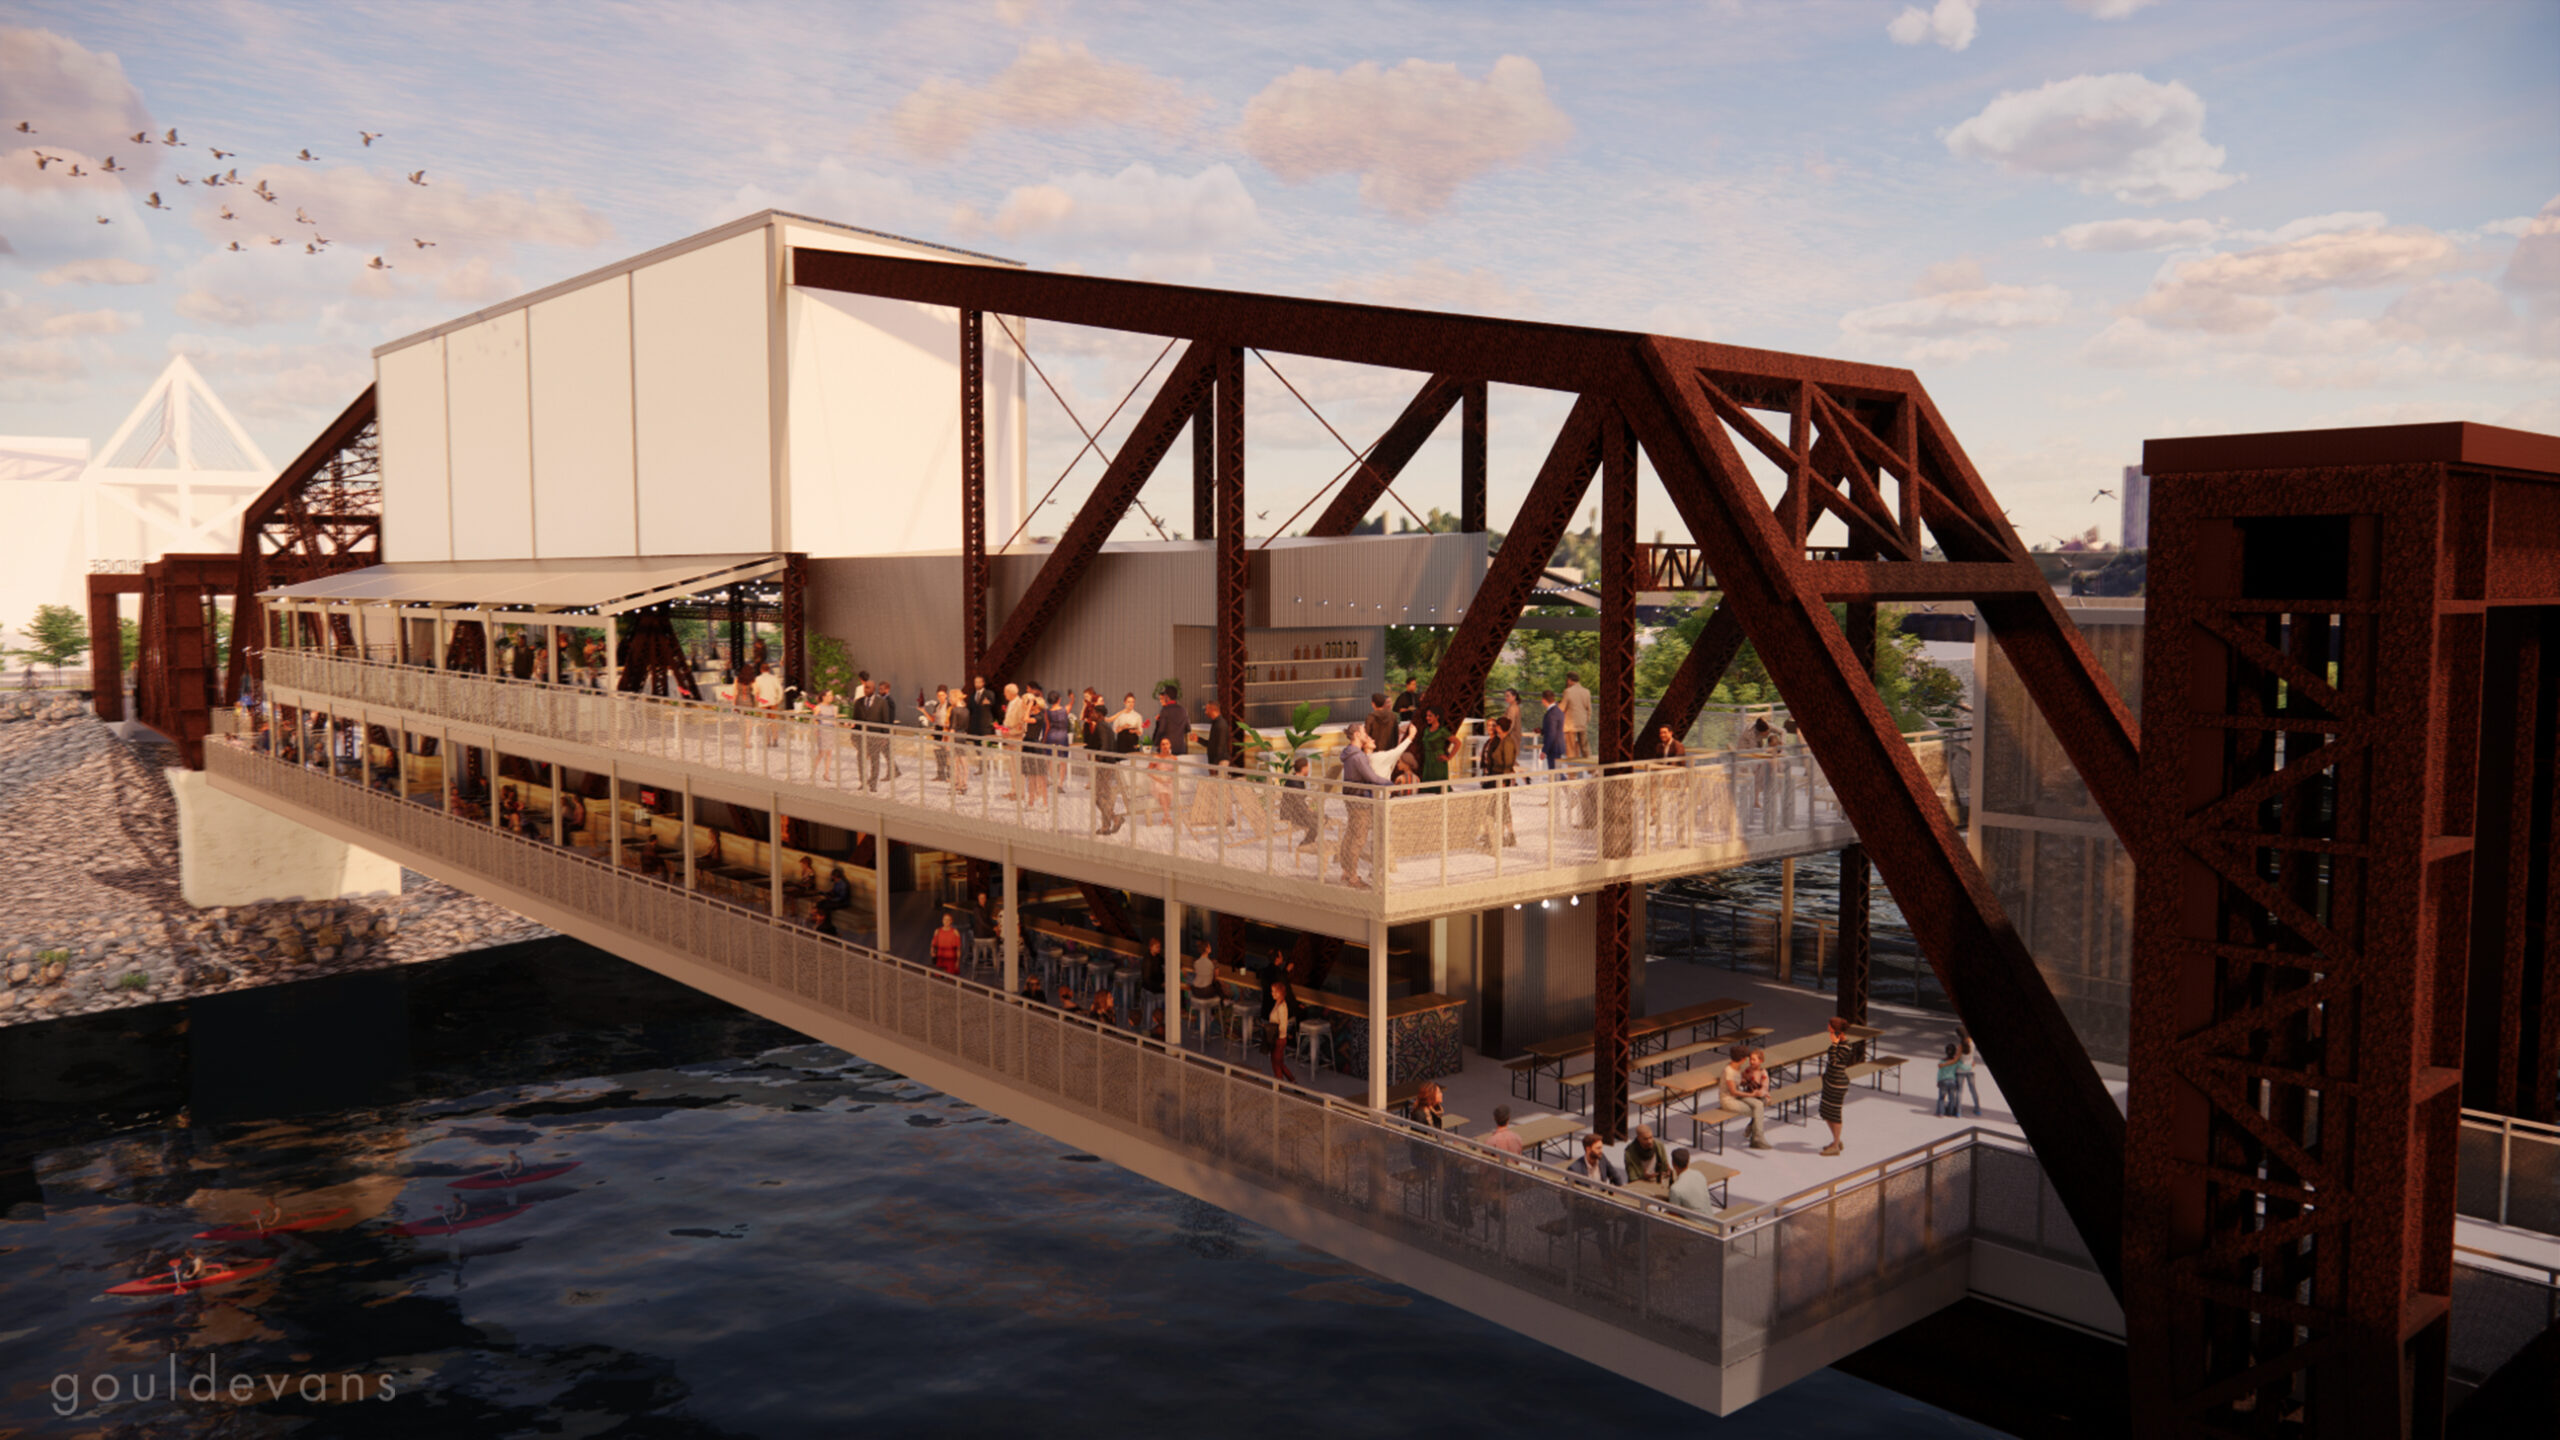 Featured image for “Construction Set to Begin in March on Rock Island Bridge, “America’s First Destination Landmark Bridge””